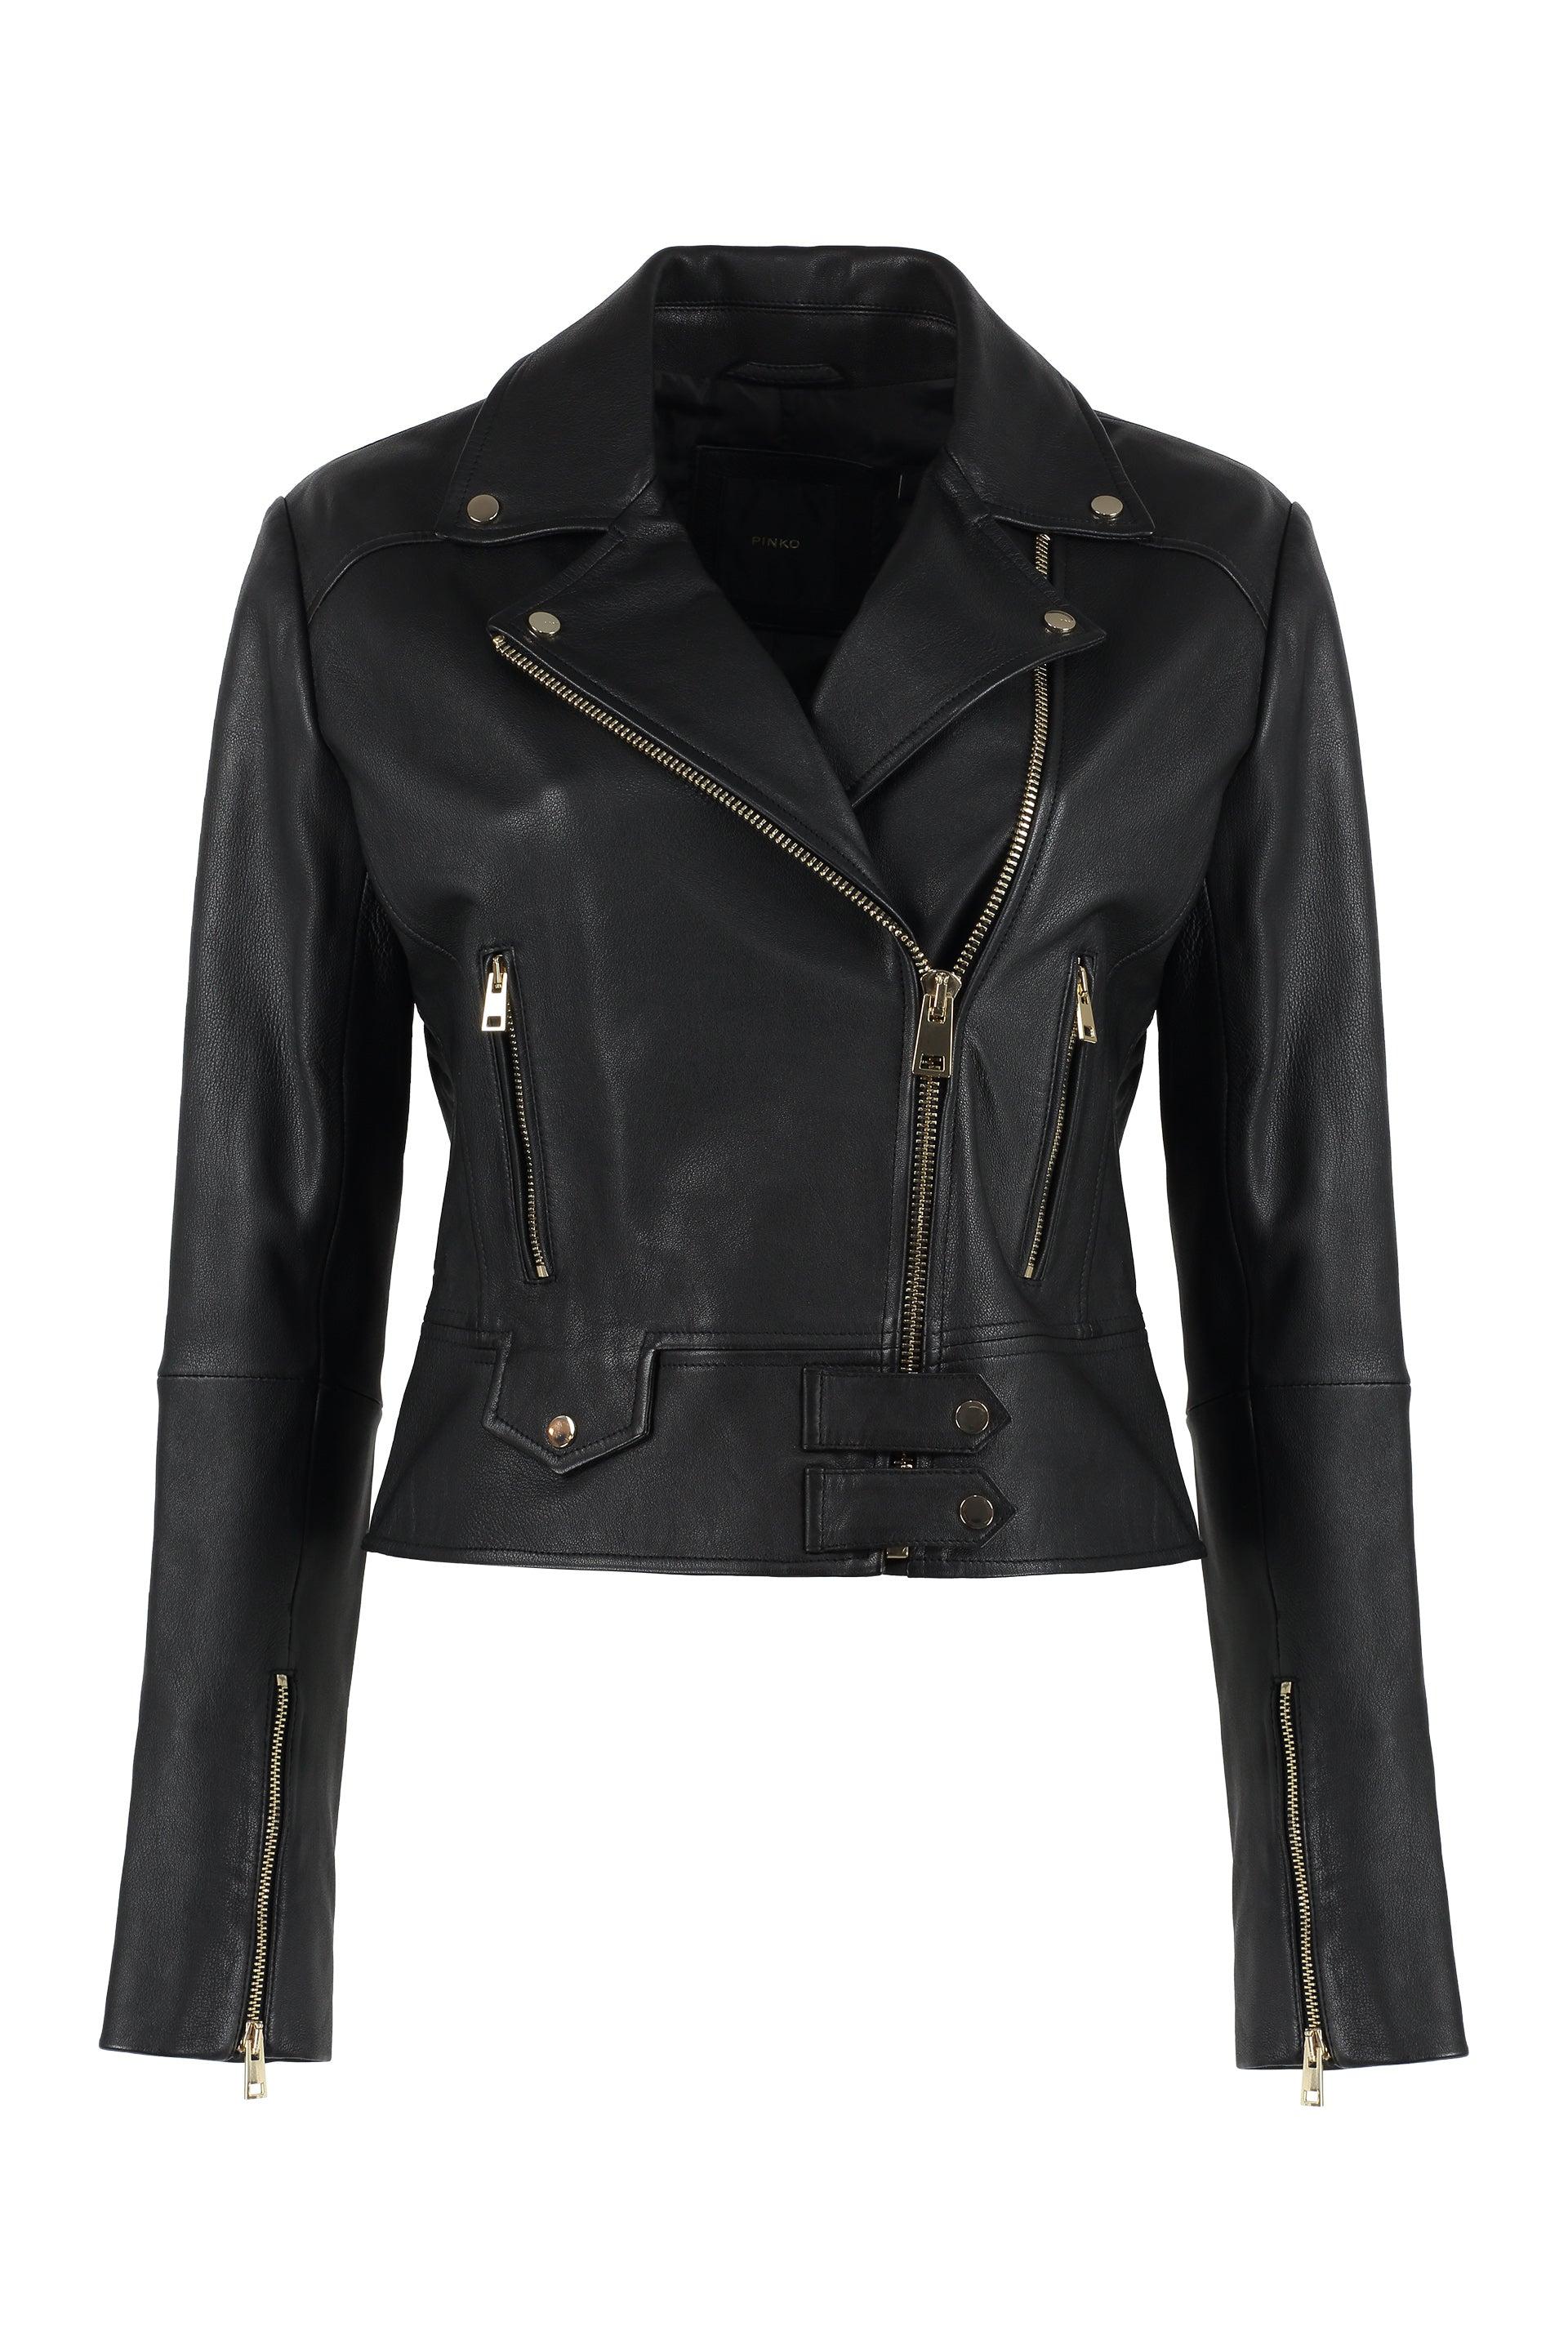 Pinko Sensibile Leather Jacket in Black | Lyst